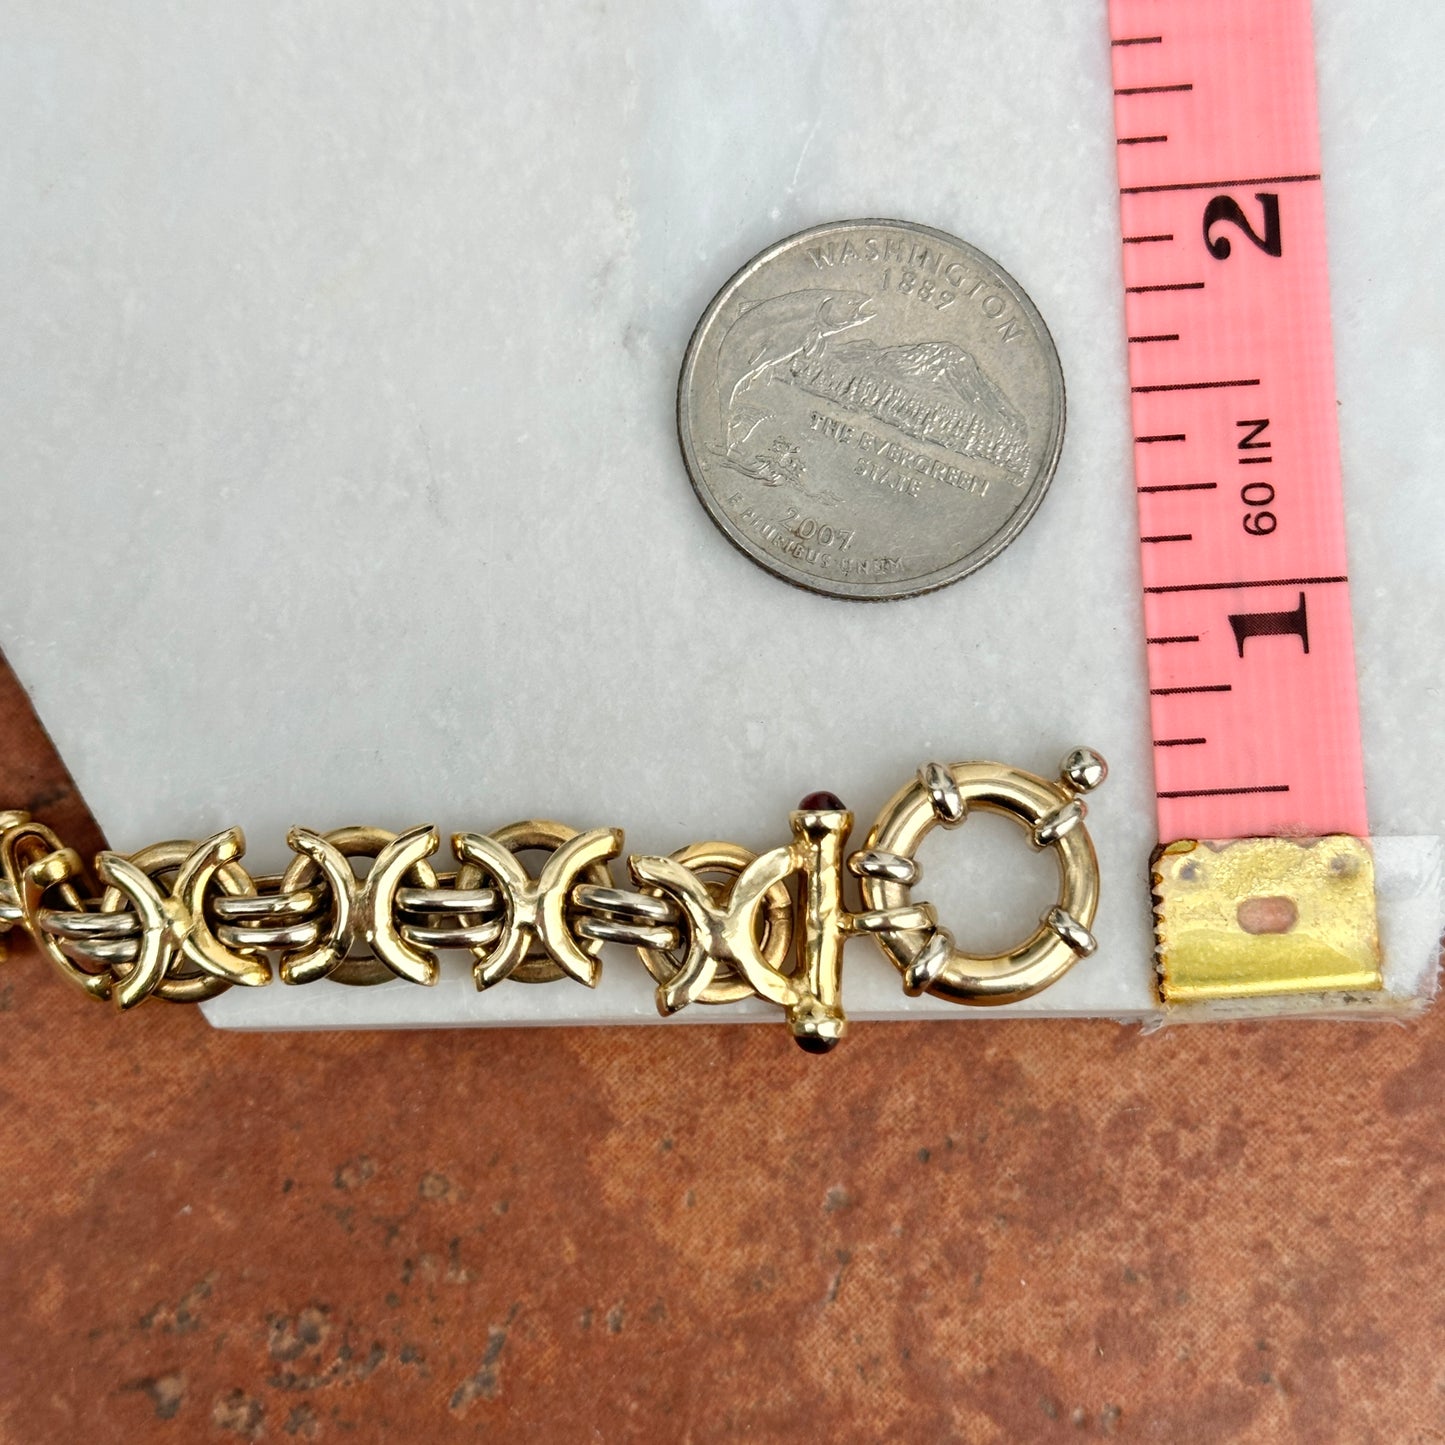 Estate 14KT White Gold and Yellow Gold Alternating Chain Garnet Toggle Bracelet